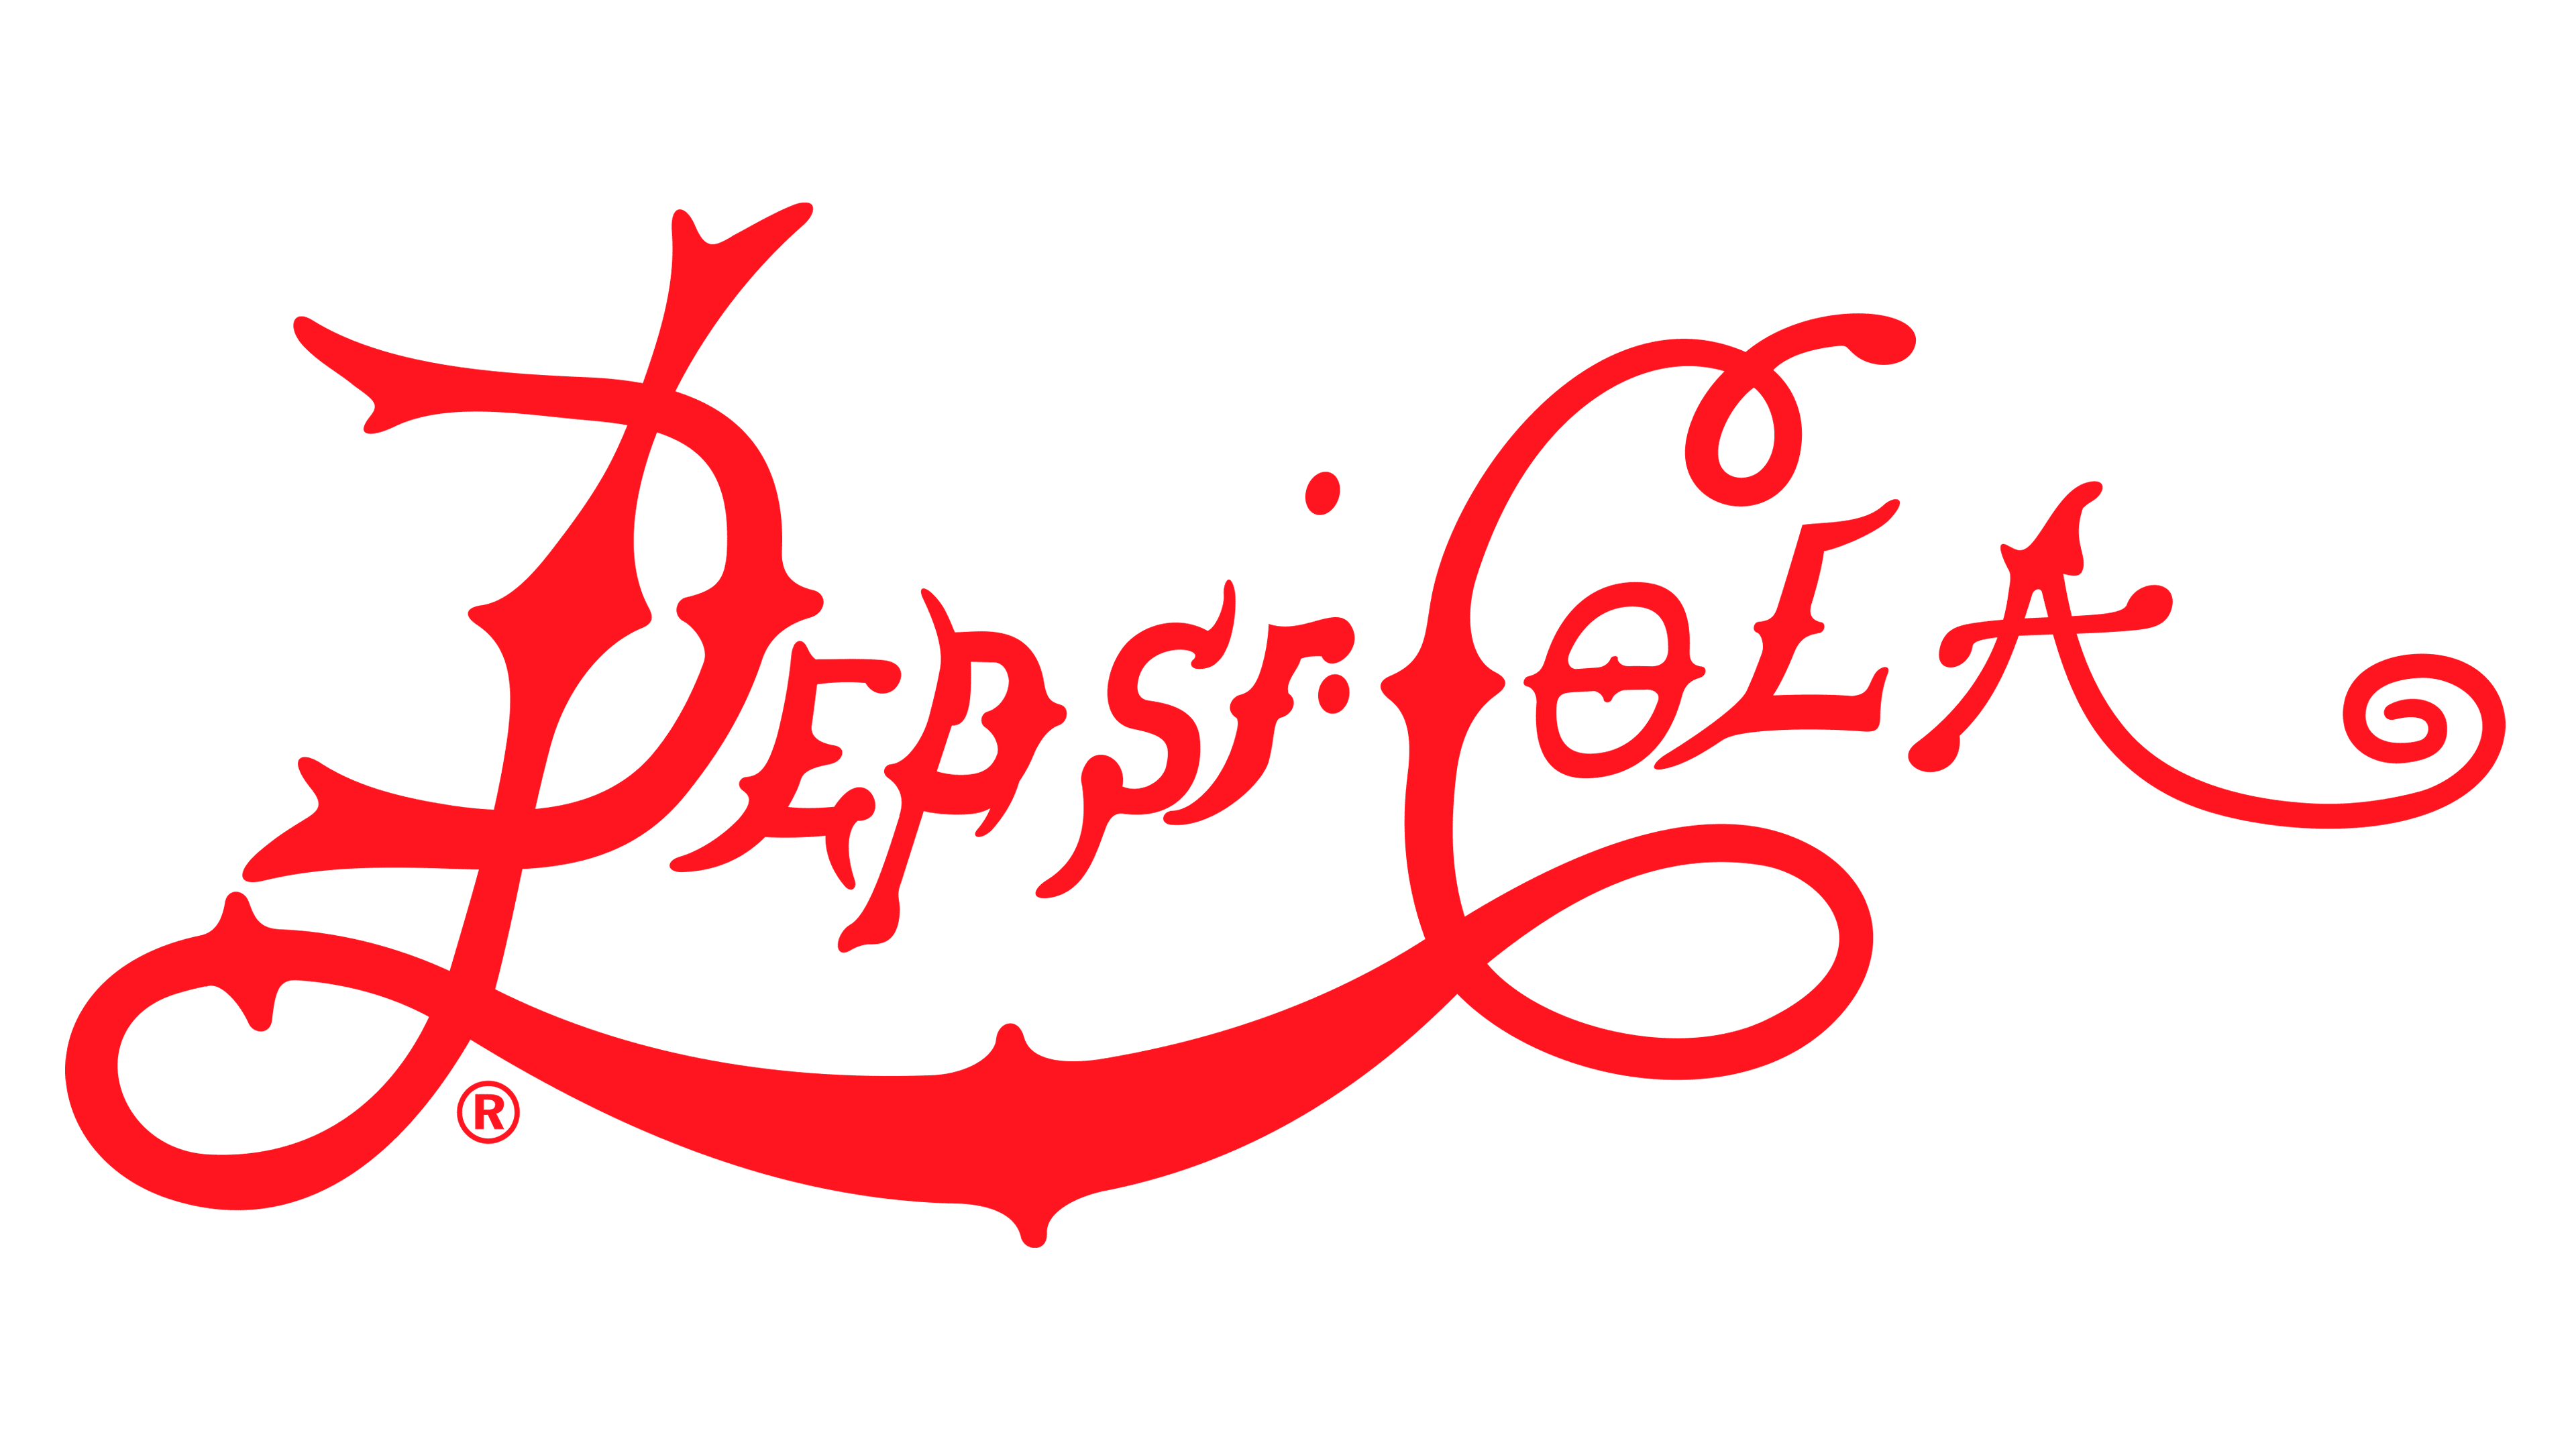 Pepsi Logo 1907